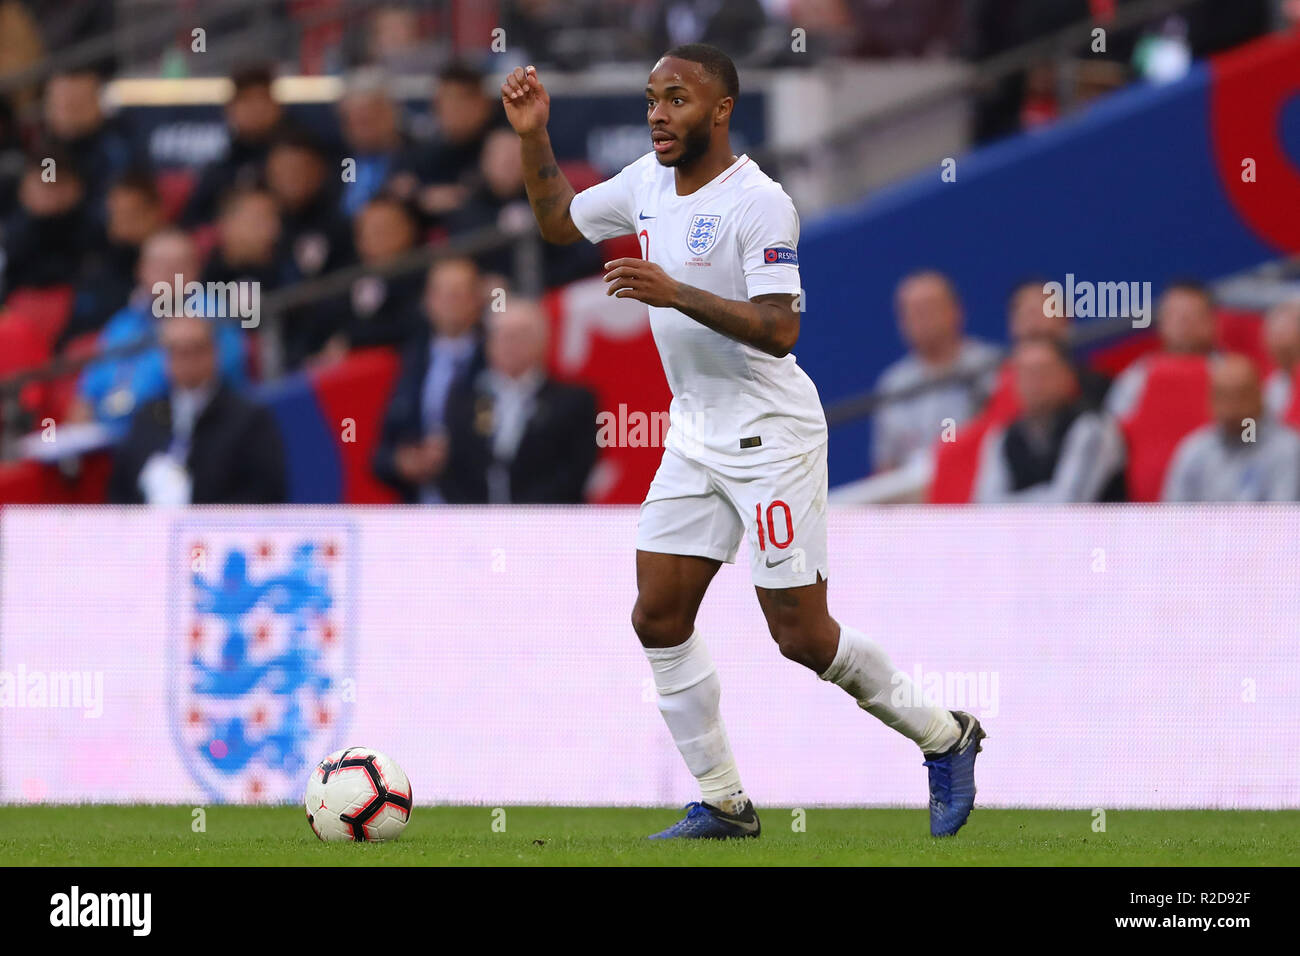 Raheem Sterling of England - England v Croatia, UEFA Nations League - Group A4, Wembley Stadium, London - 18th November 2018 Stock Photo